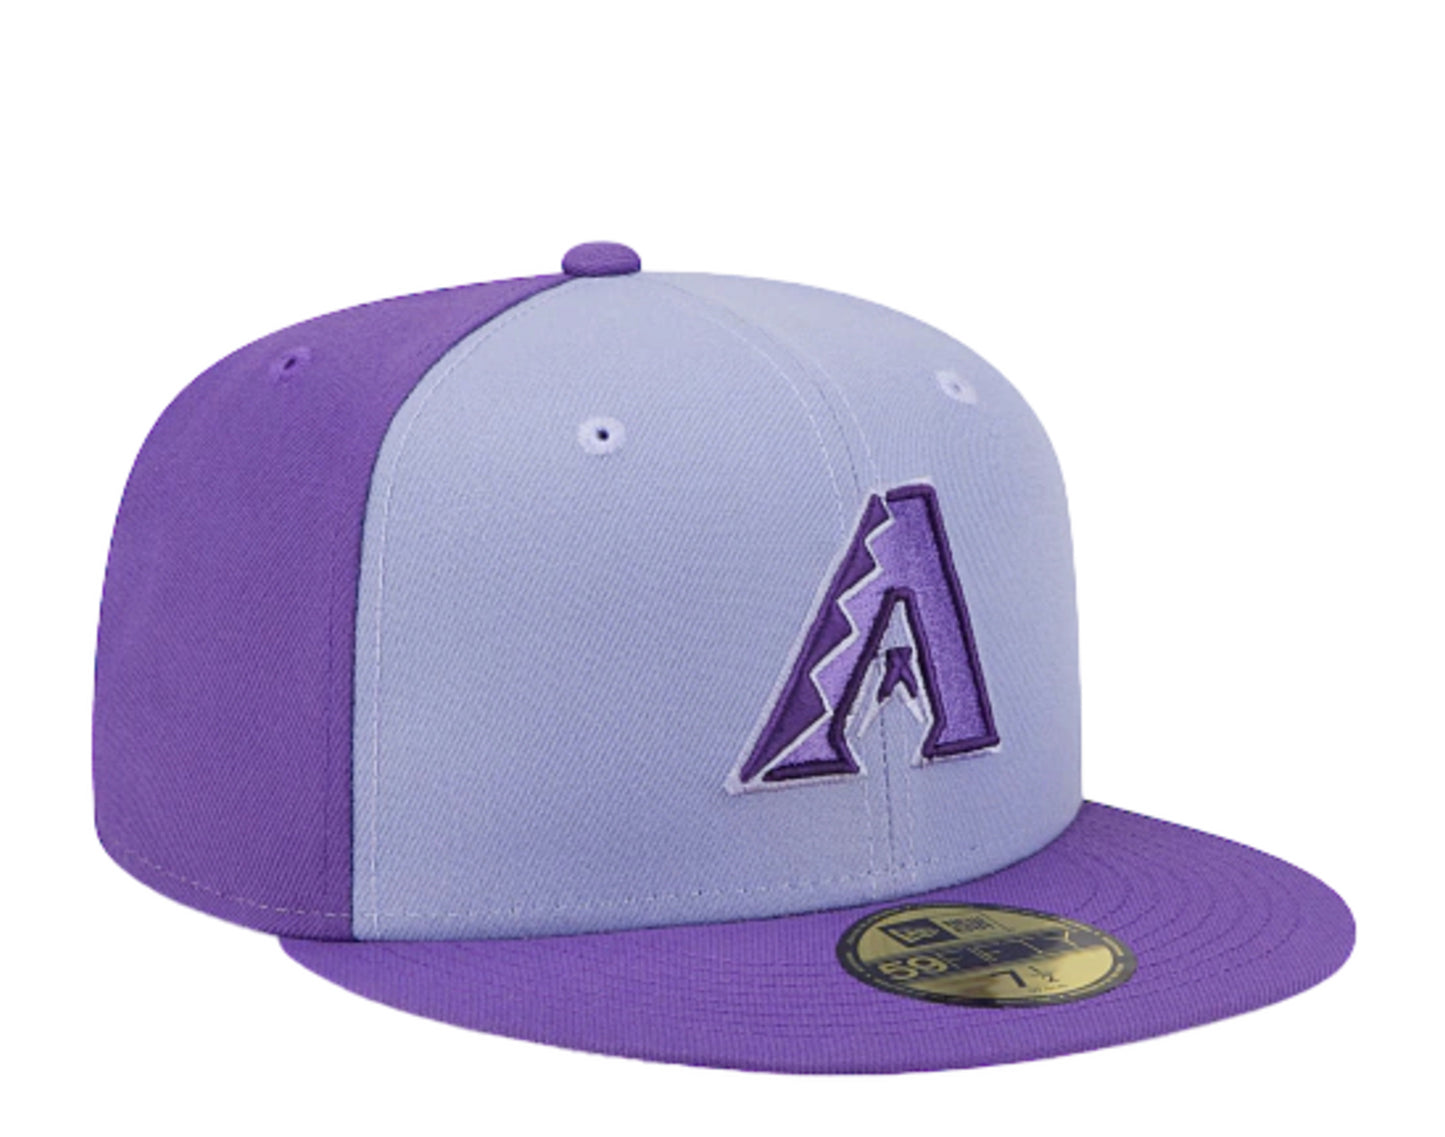 New Era 59Fifty MLB Arizona Diamondbacks Tri-Tone Team Fitted Hat